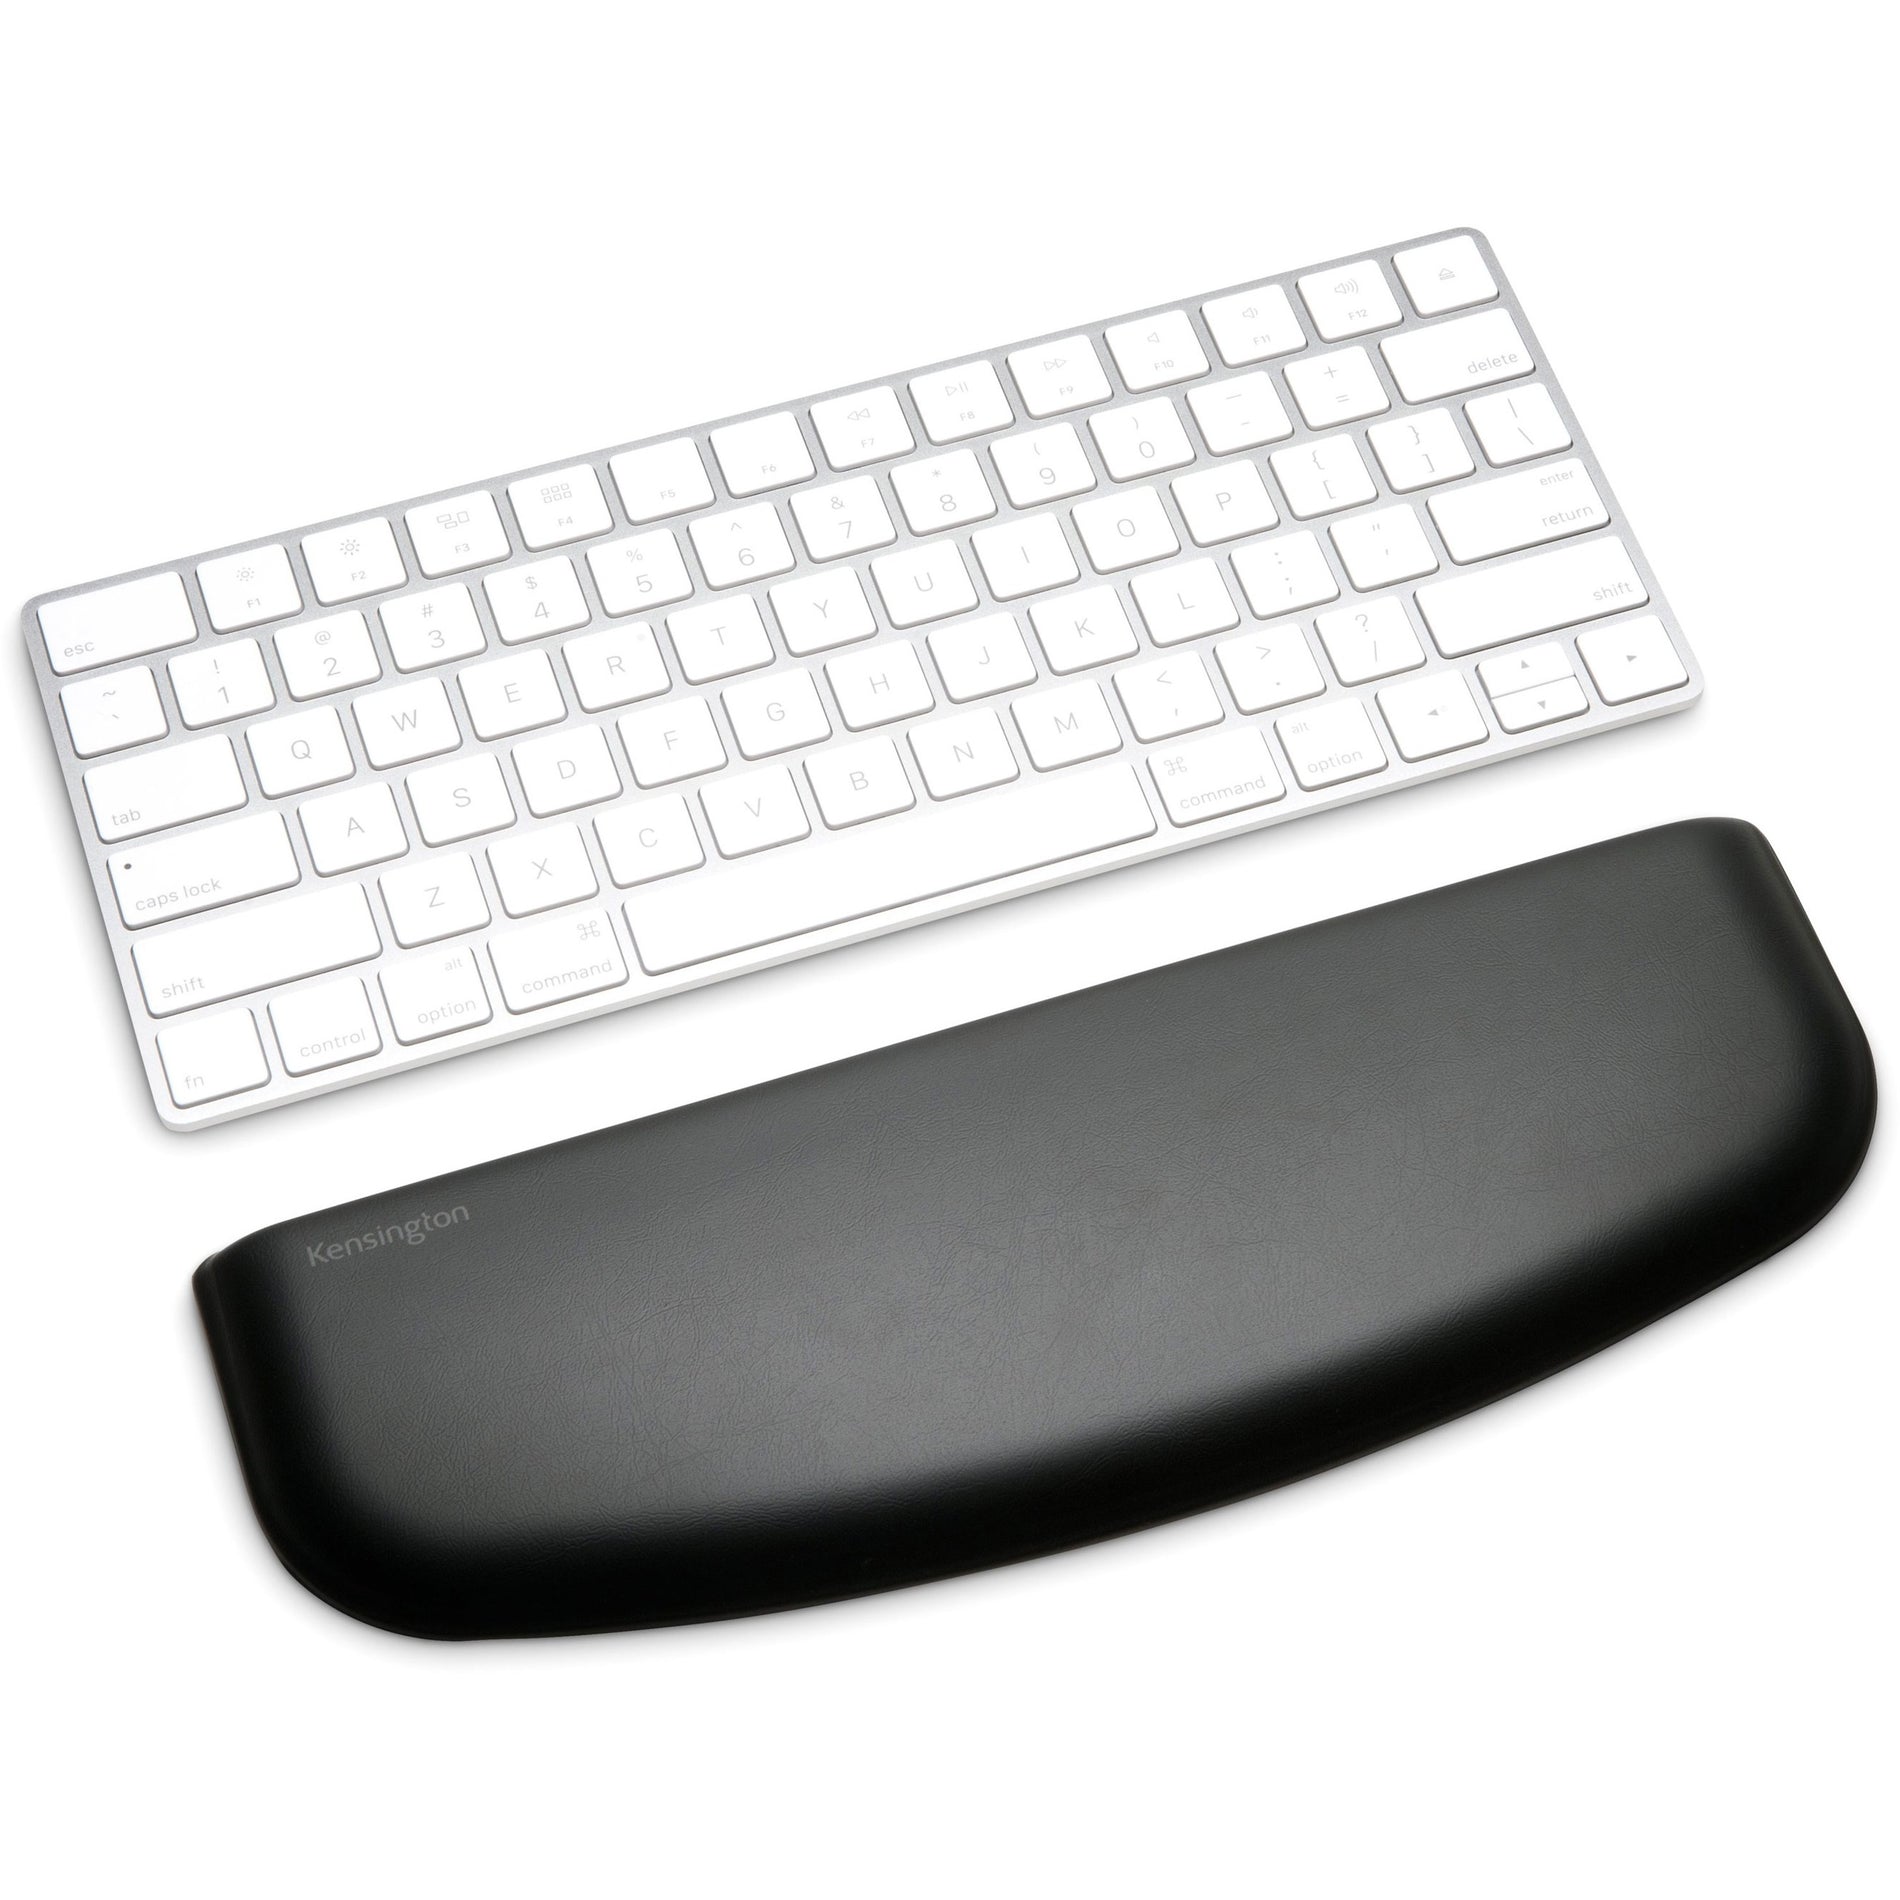 Kensington K52801WW ErgoSoft Wrist Rest for Slim, Compact Keyboards, Skid Proof Gel and Rubber Material